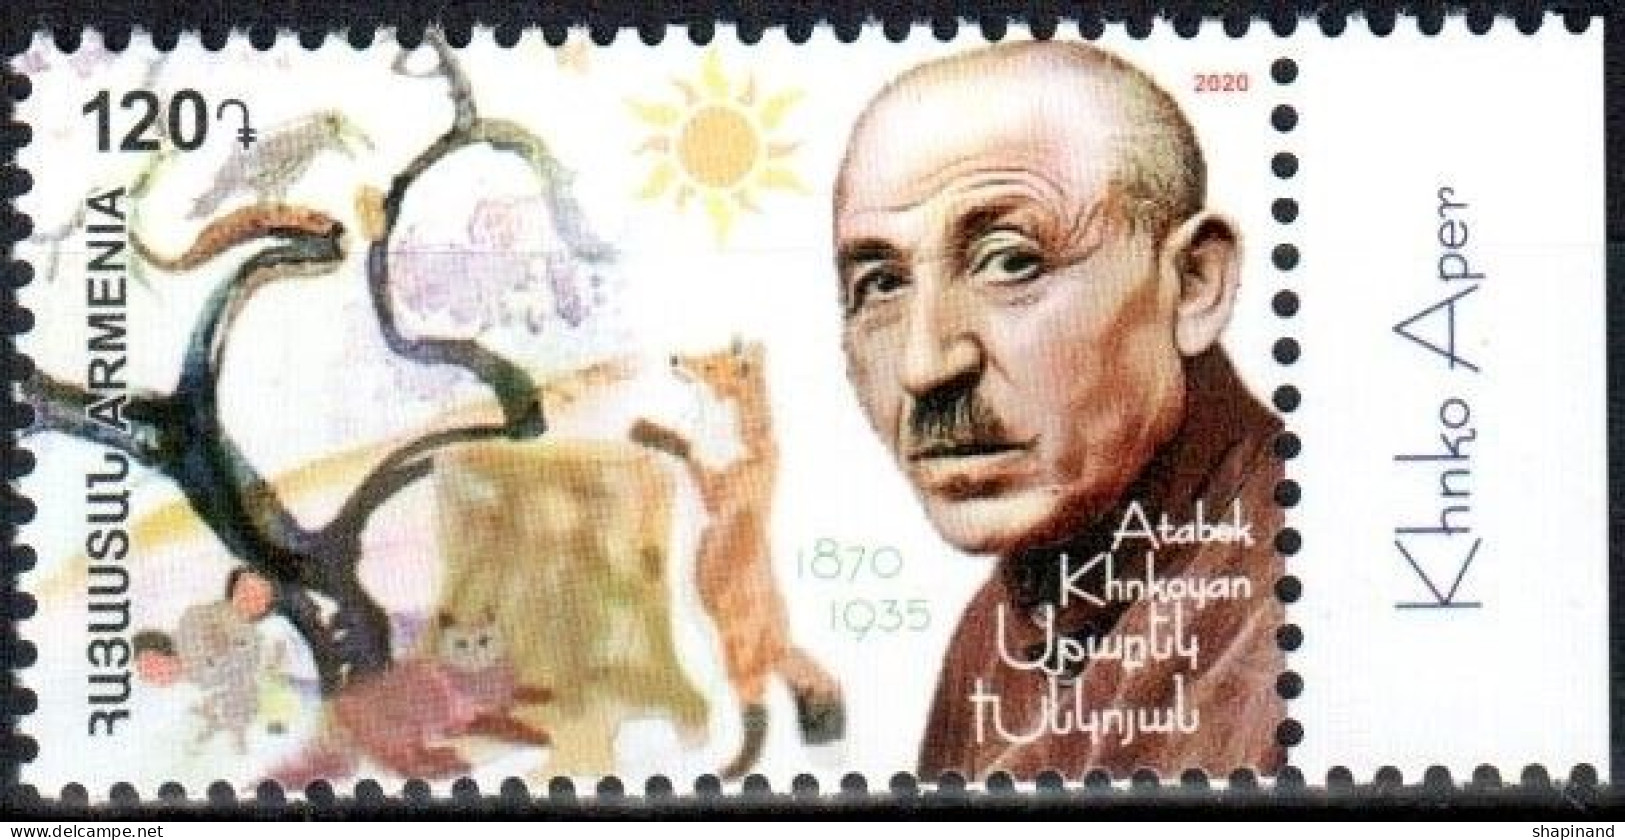 Armenia 2020 The Prominent Armenian Children’s Writer Atabek Khnkoyan (Khnko Aper, 1870-1935) 1v Quality:100% - Arménie